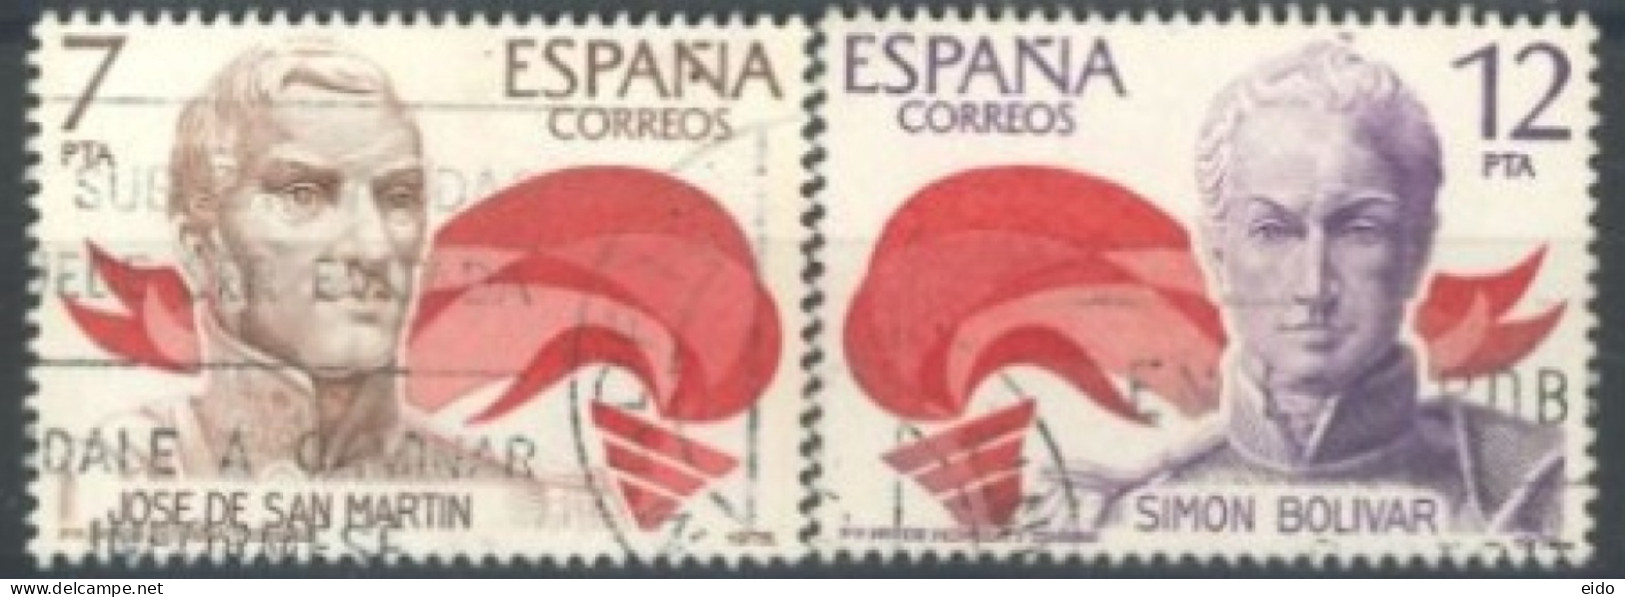 SPAIN, 1978, JOSE DE SAN MARTIN & SIMON BOLIVAR STAMPS COMPLETE SET OF 2, # 2116/17, USED. - Used Stamps